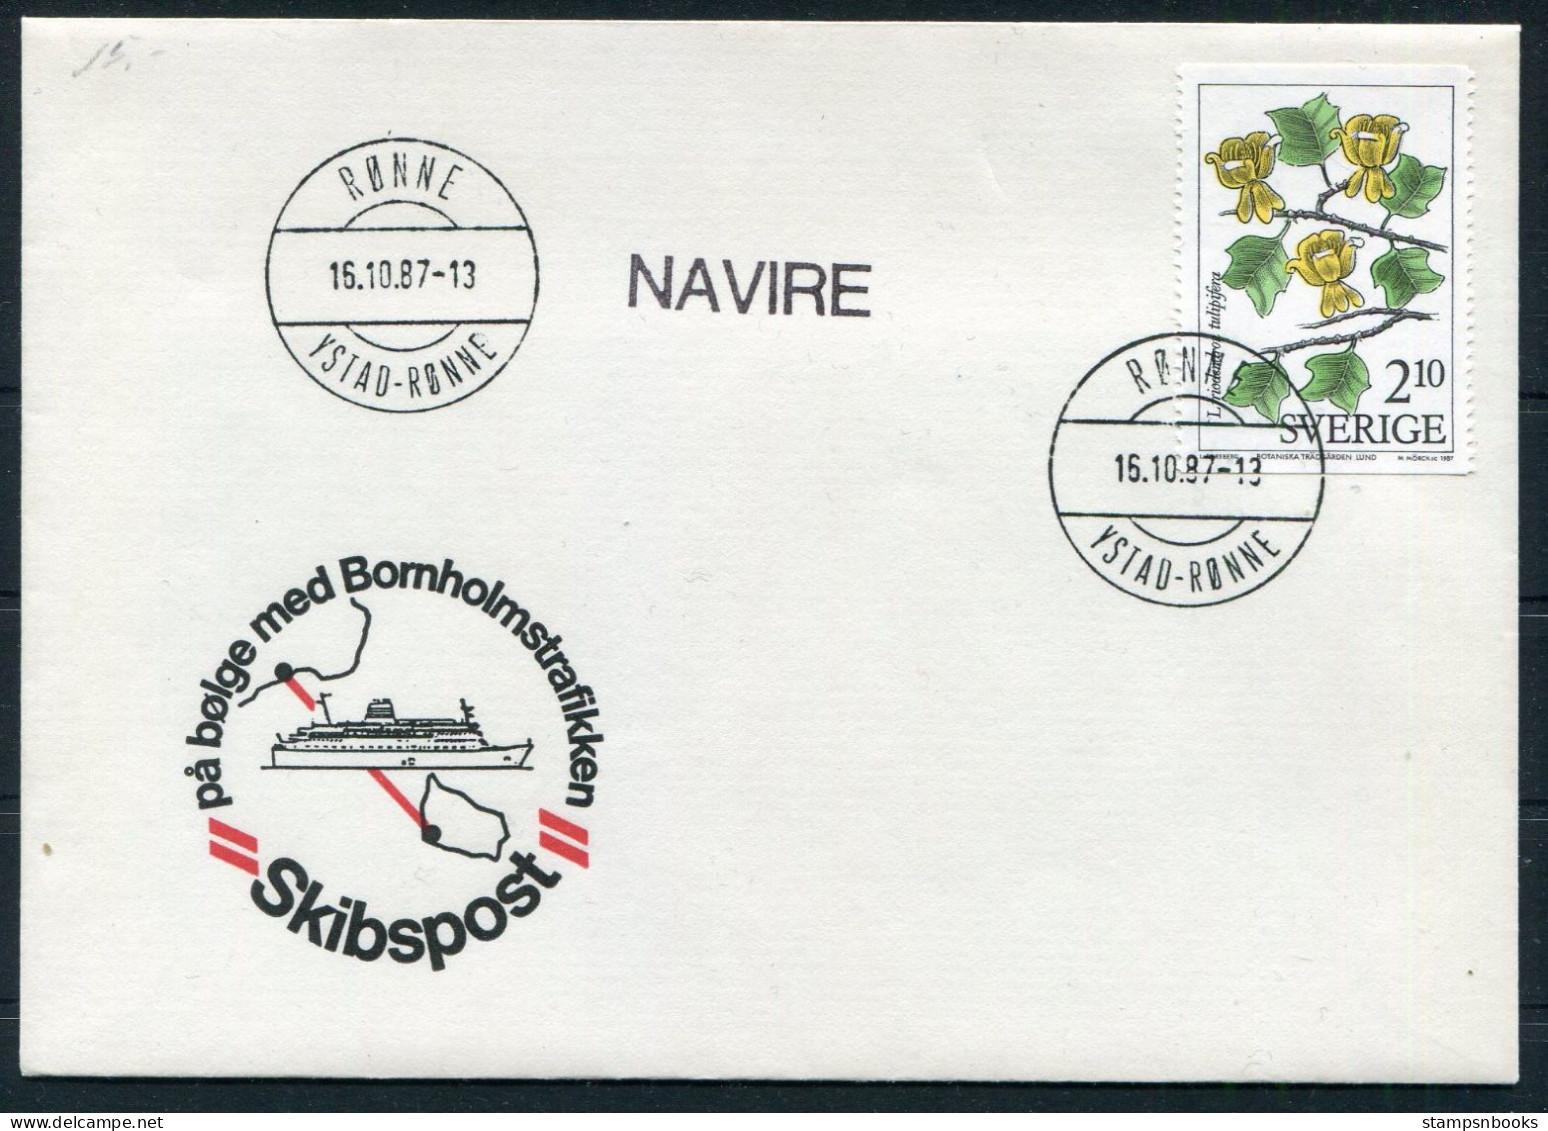 1987 Sweden Denmark Bornholm Ystad - Ronne Ship NAVIRE Skibspost Cover - Briefe U. Dokumente